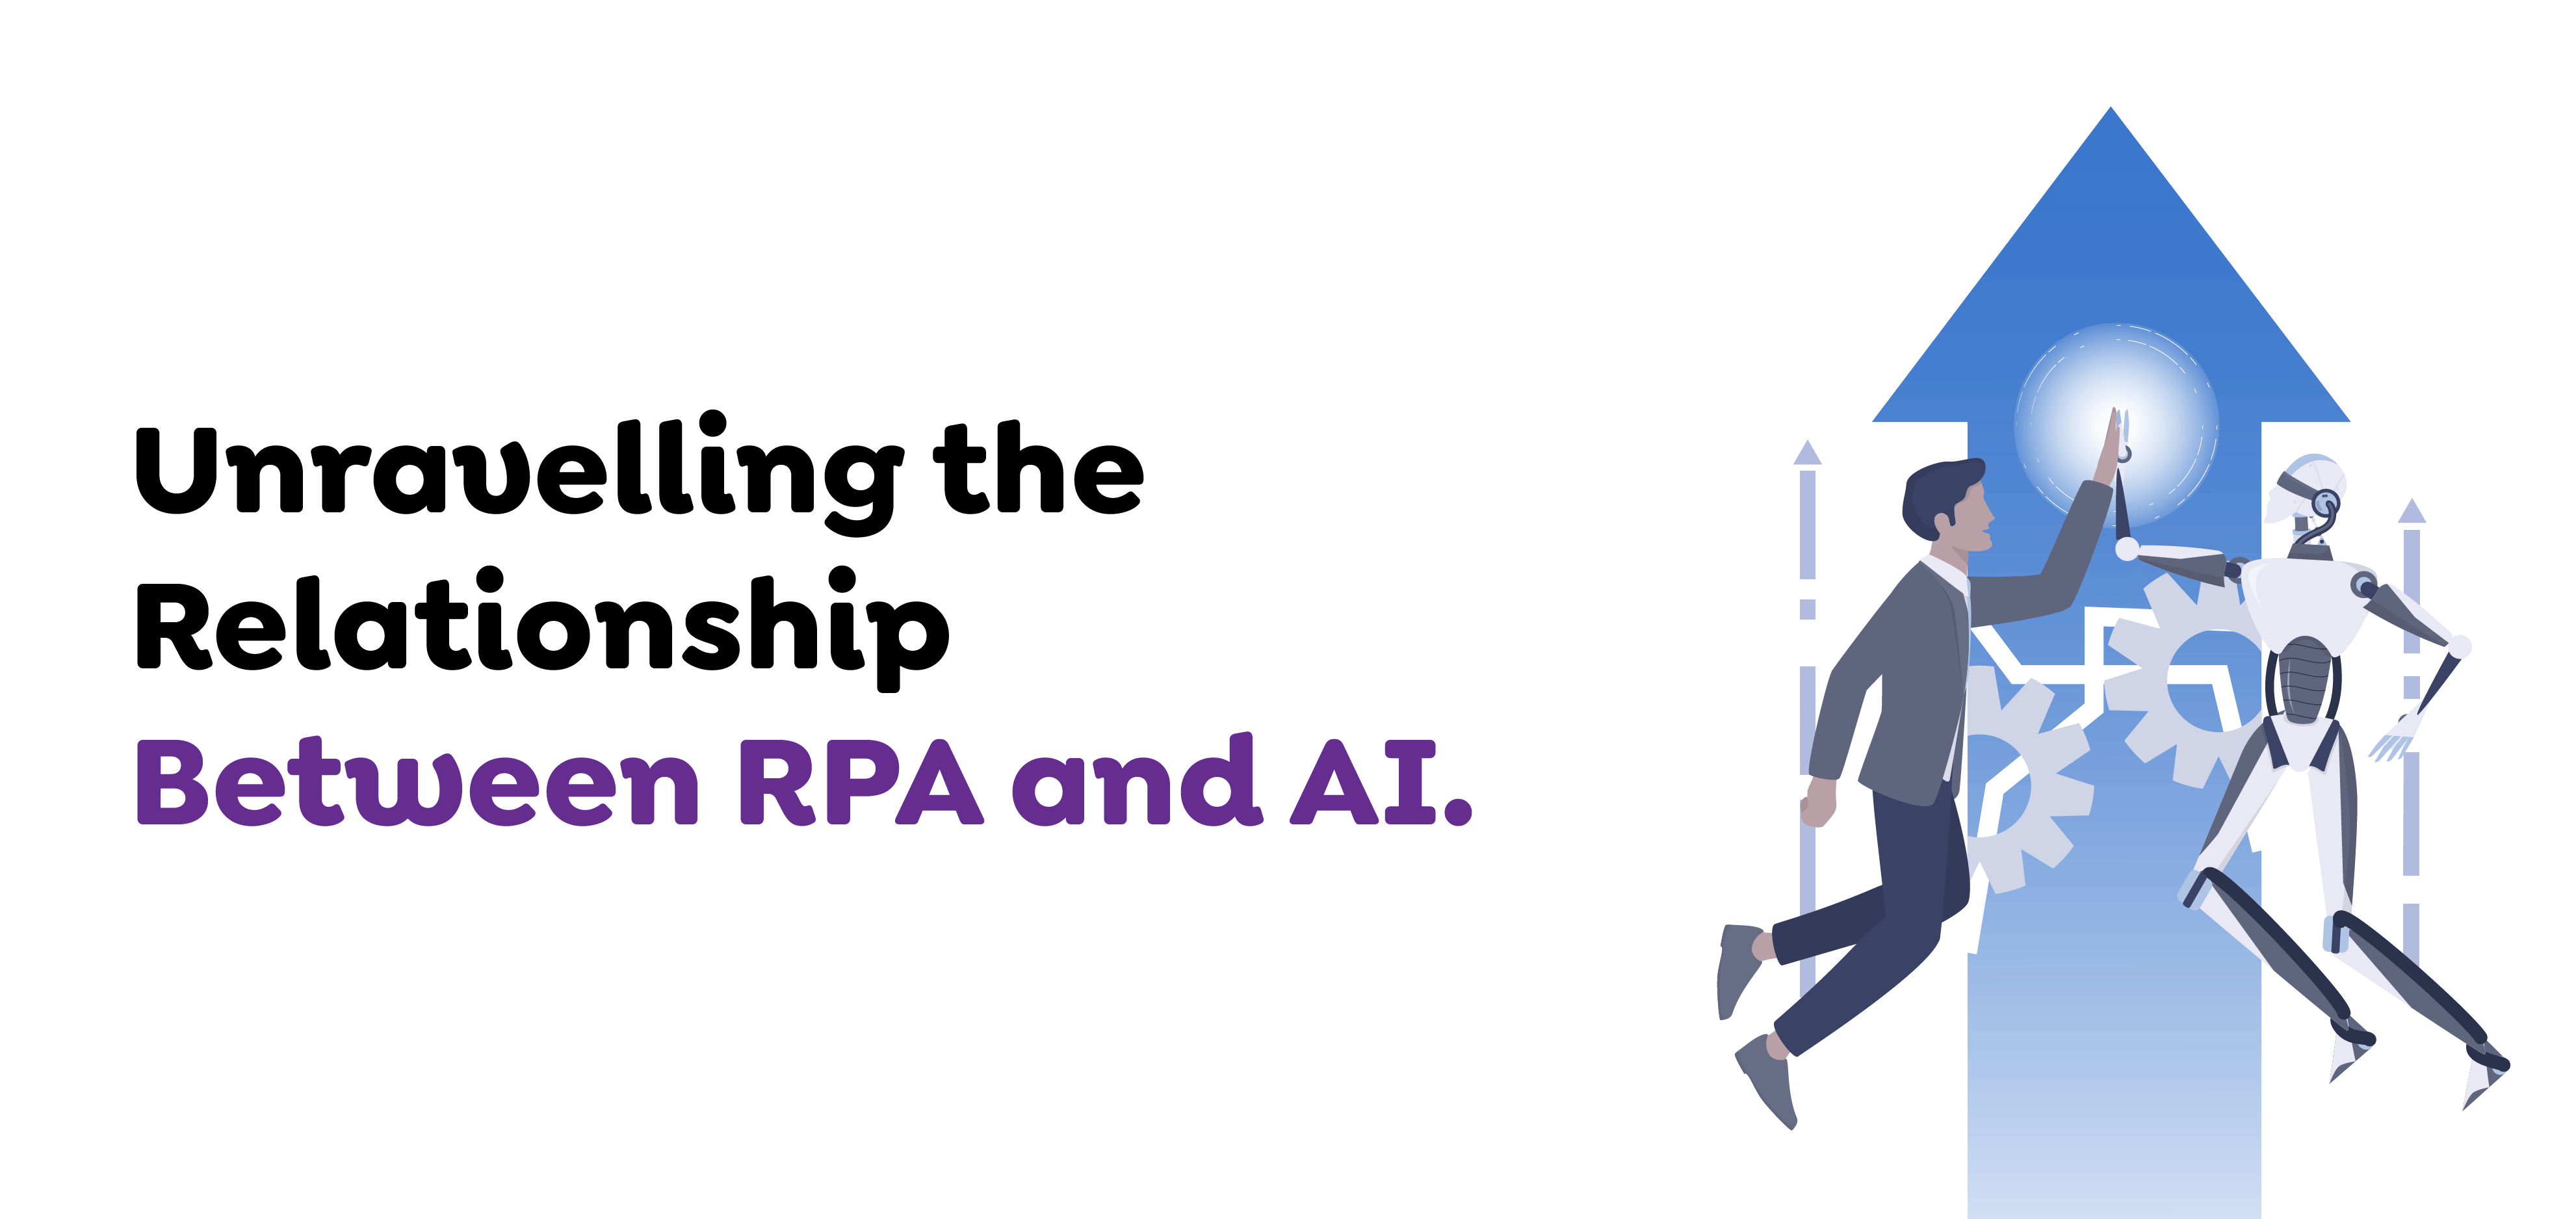 RPA and AI